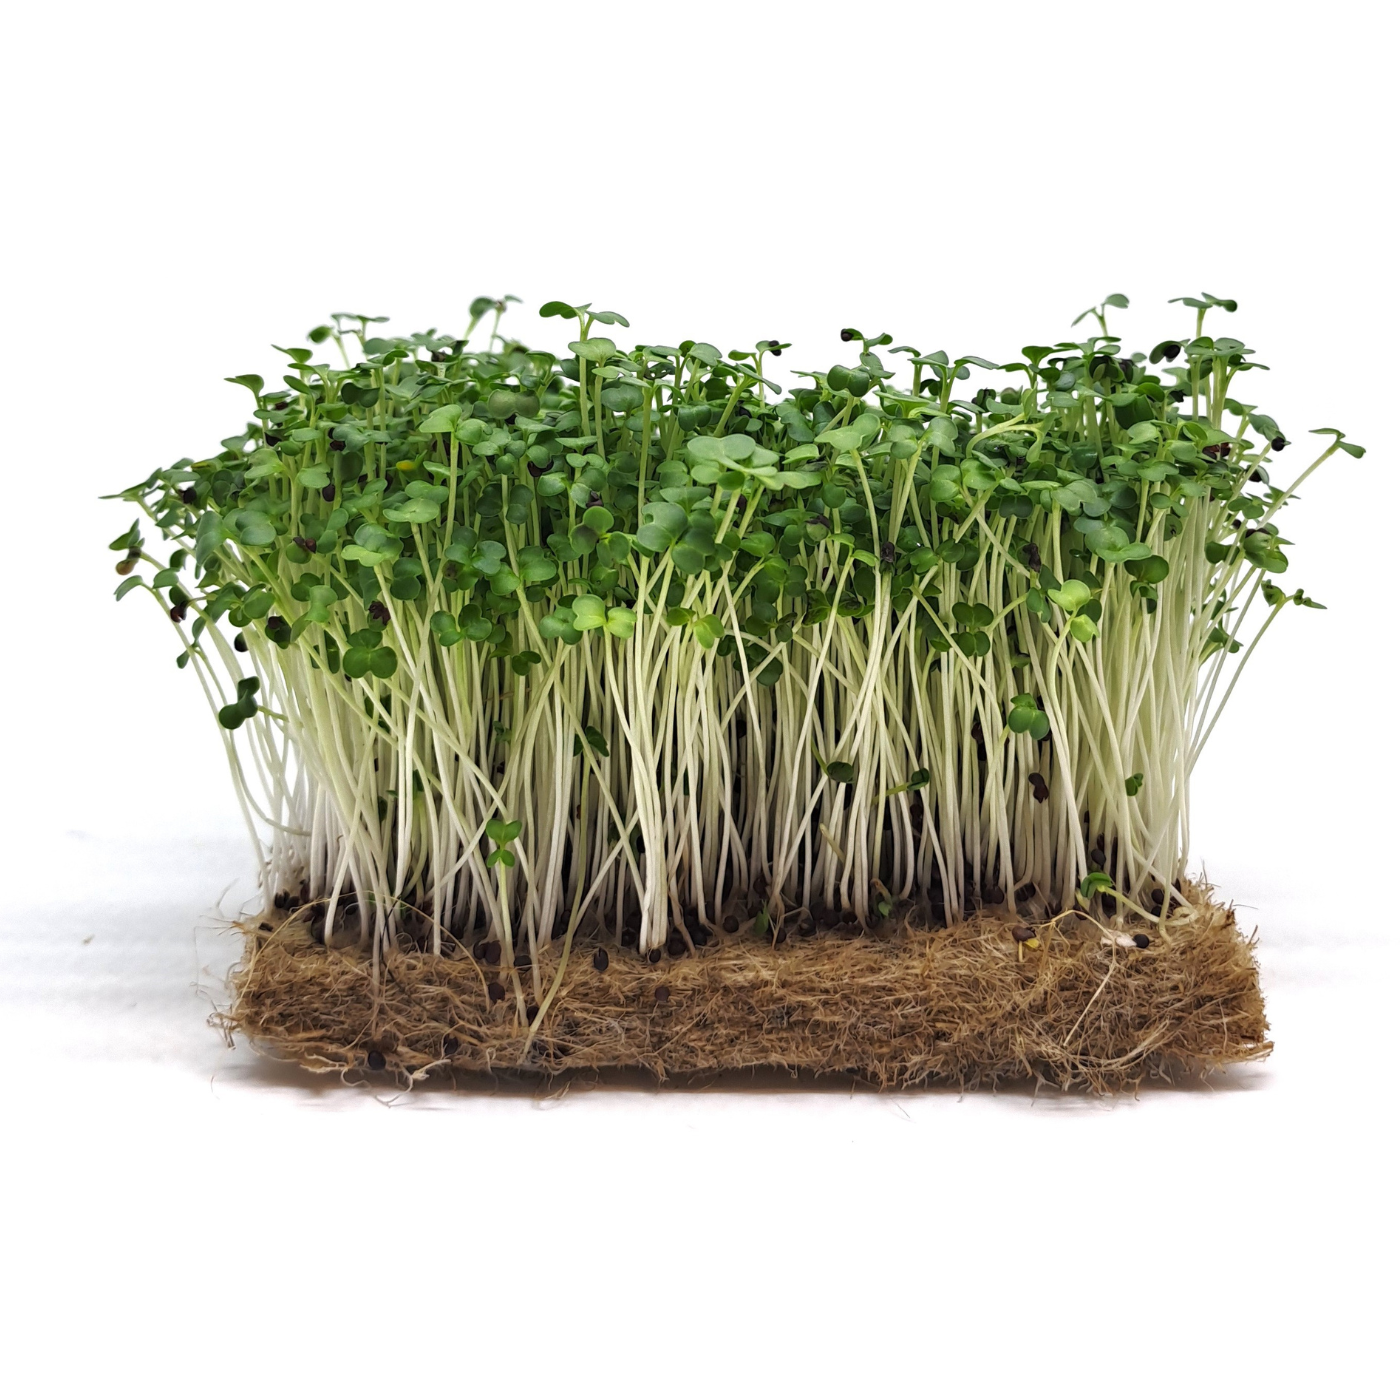 Organic broccoli calabrese microgreens